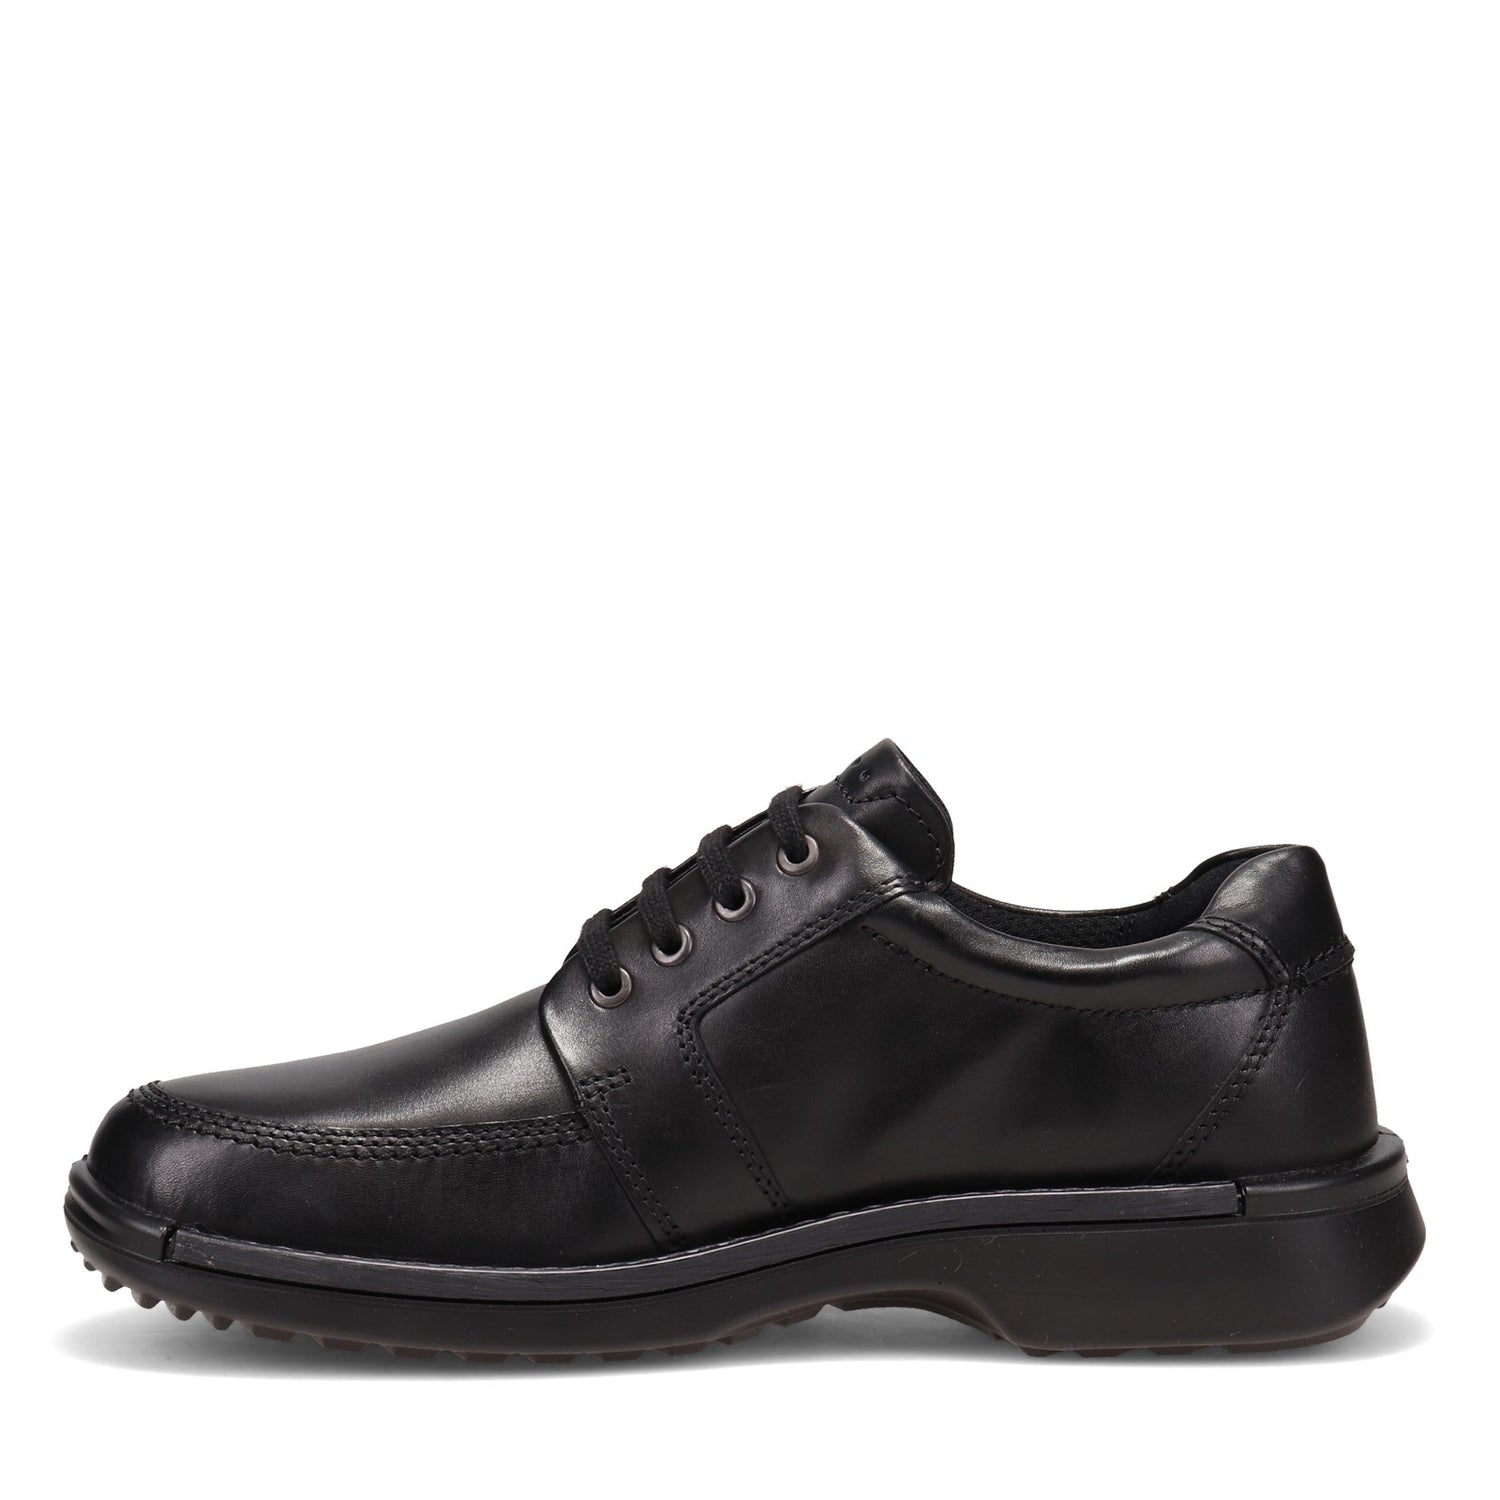 Peltz Shoes  Men's Ecco Fusion II Tie Oxford BLACK 500134-01001